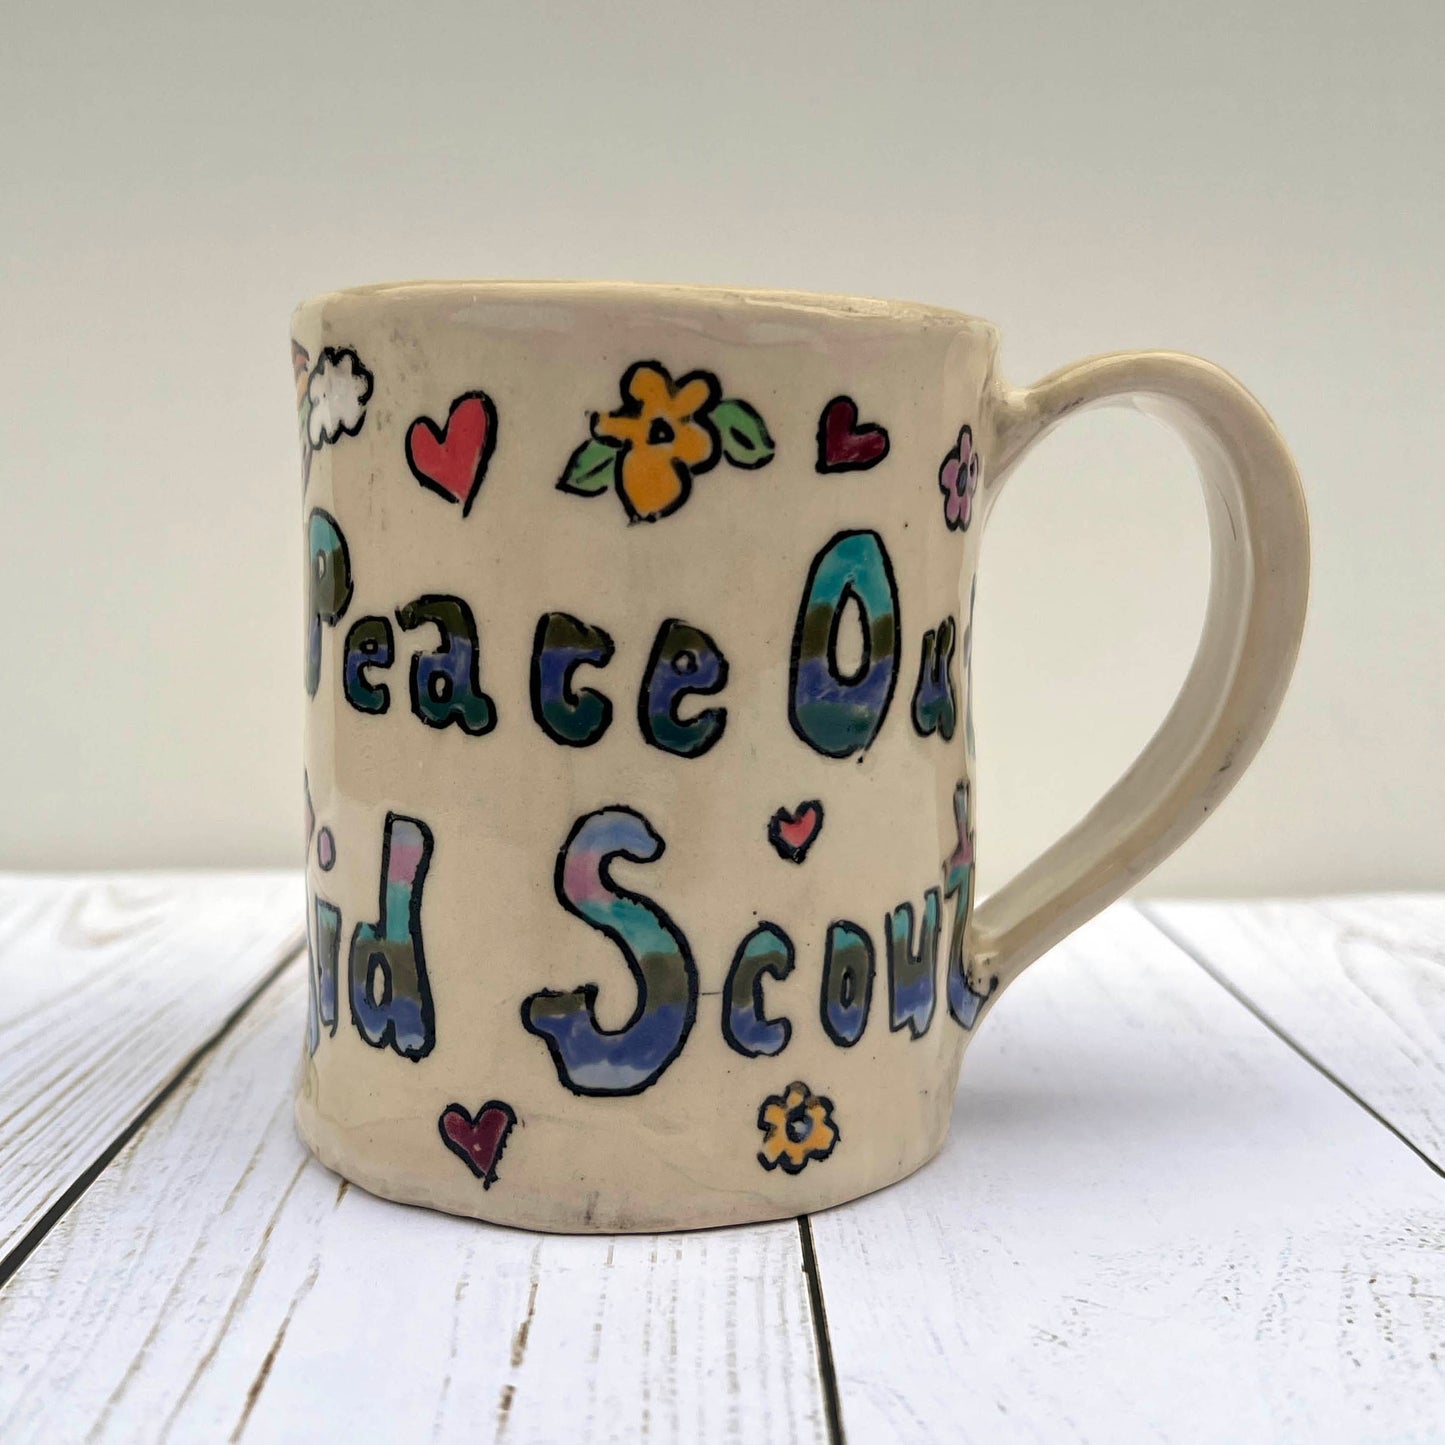 Peace of the Rainbow Ceramic Mug